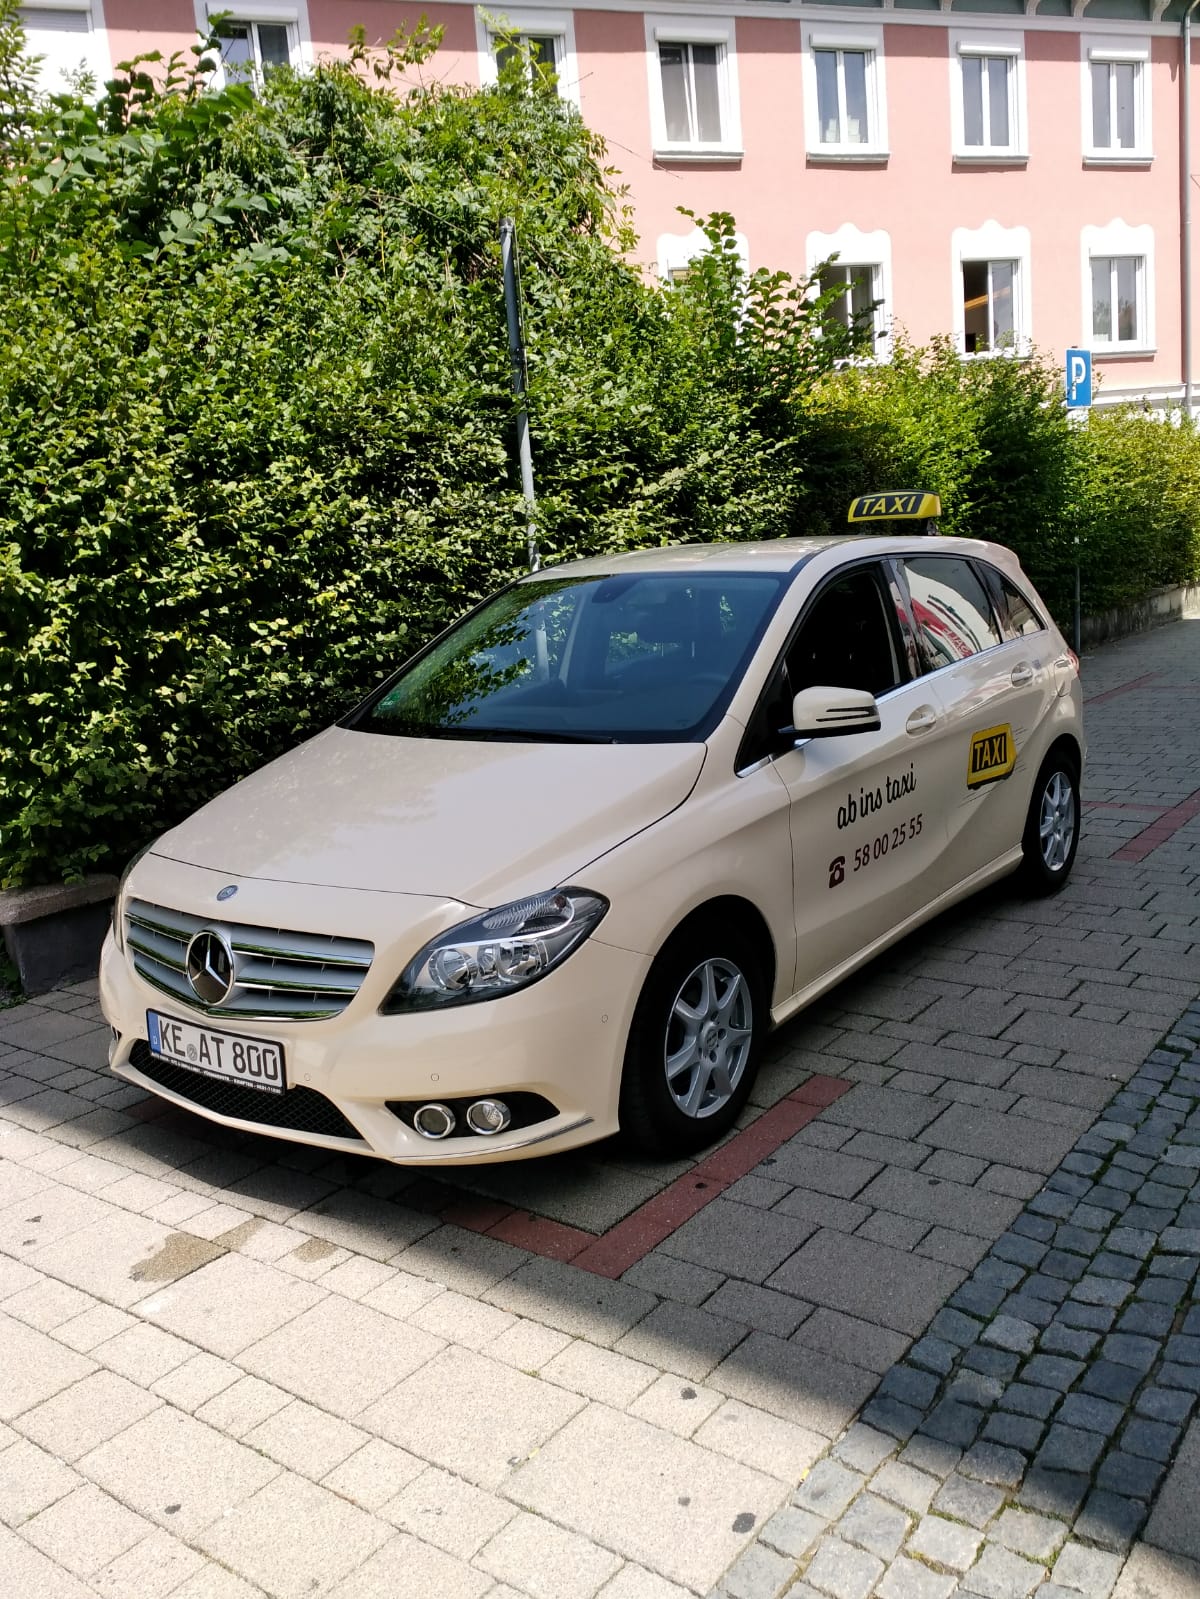 Ab ins Taxi GmbH  Fahrzeuge